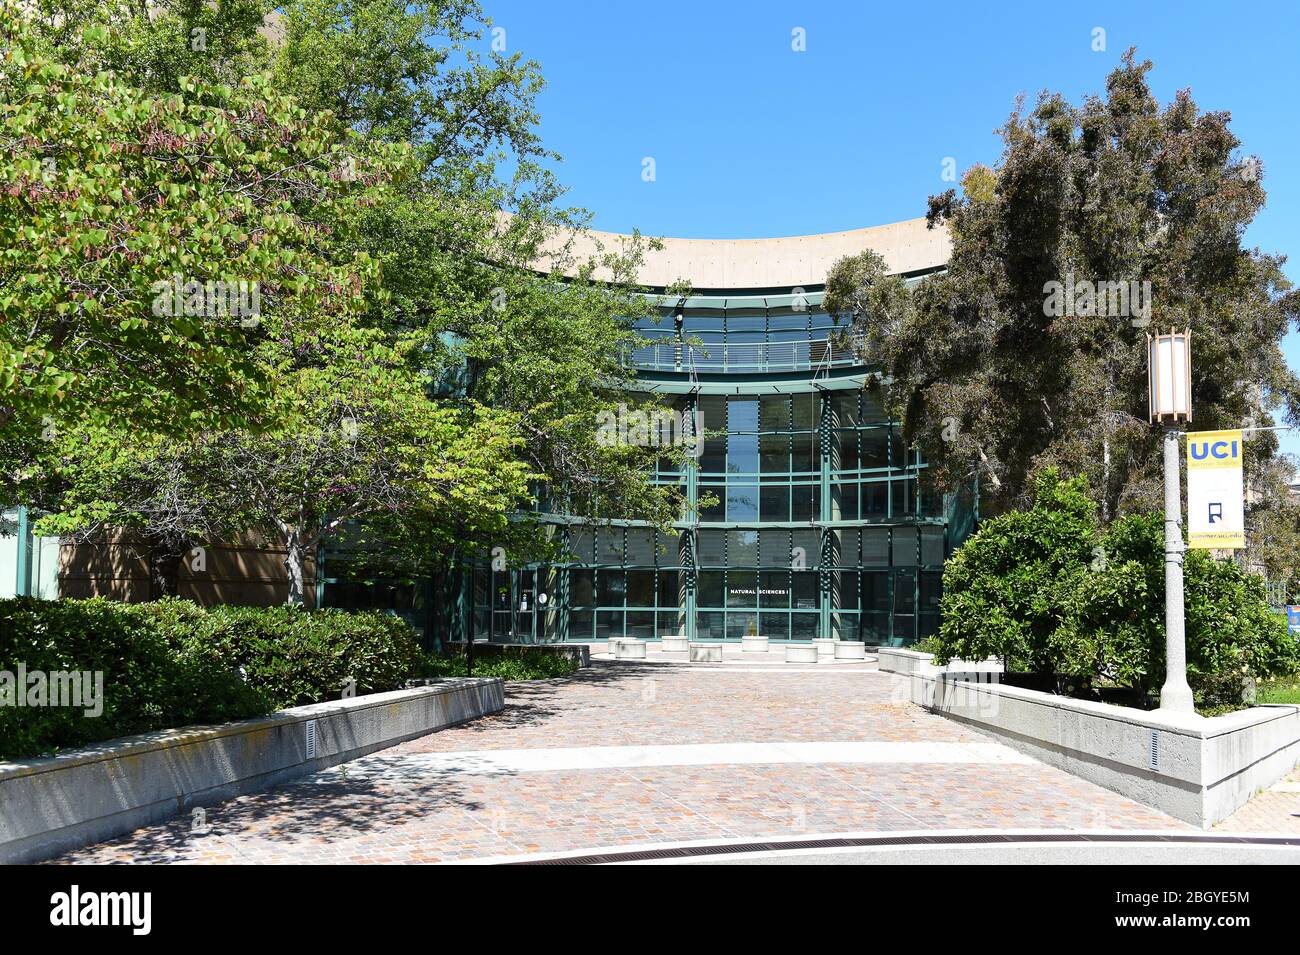 IRVINE, KALIFORNIEN - 22. APRIL 2020: Natural Science Building auf dem Campus der University of California Irvine, UCI. Stockfoto